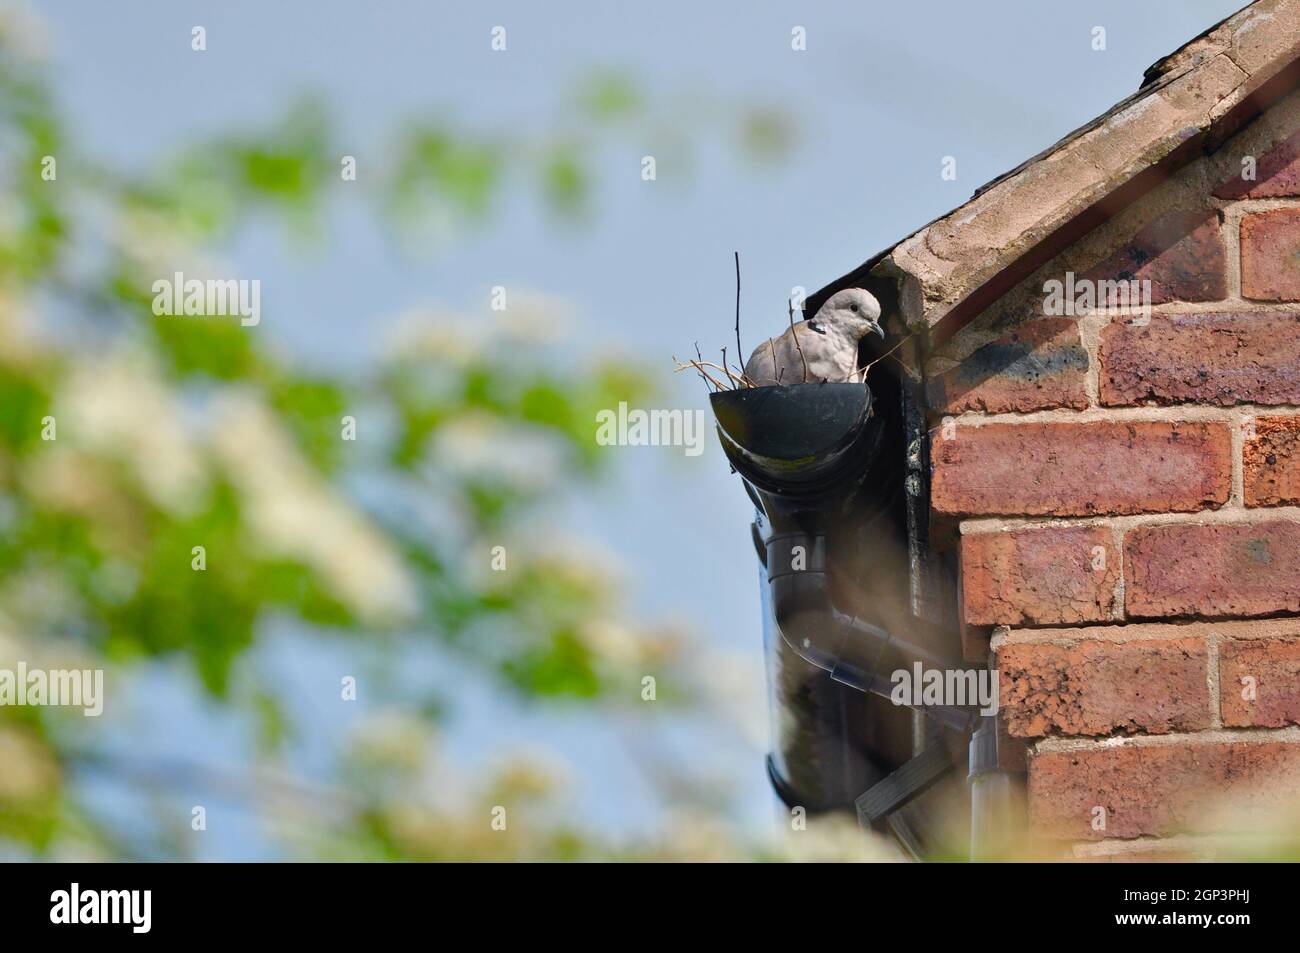 Eurasian collared dove nesting in the gutter of house. Collared dove nest. Bird nesting in house guttering. Bird nest in gutter. Streptopelia decaocto Stock Photo